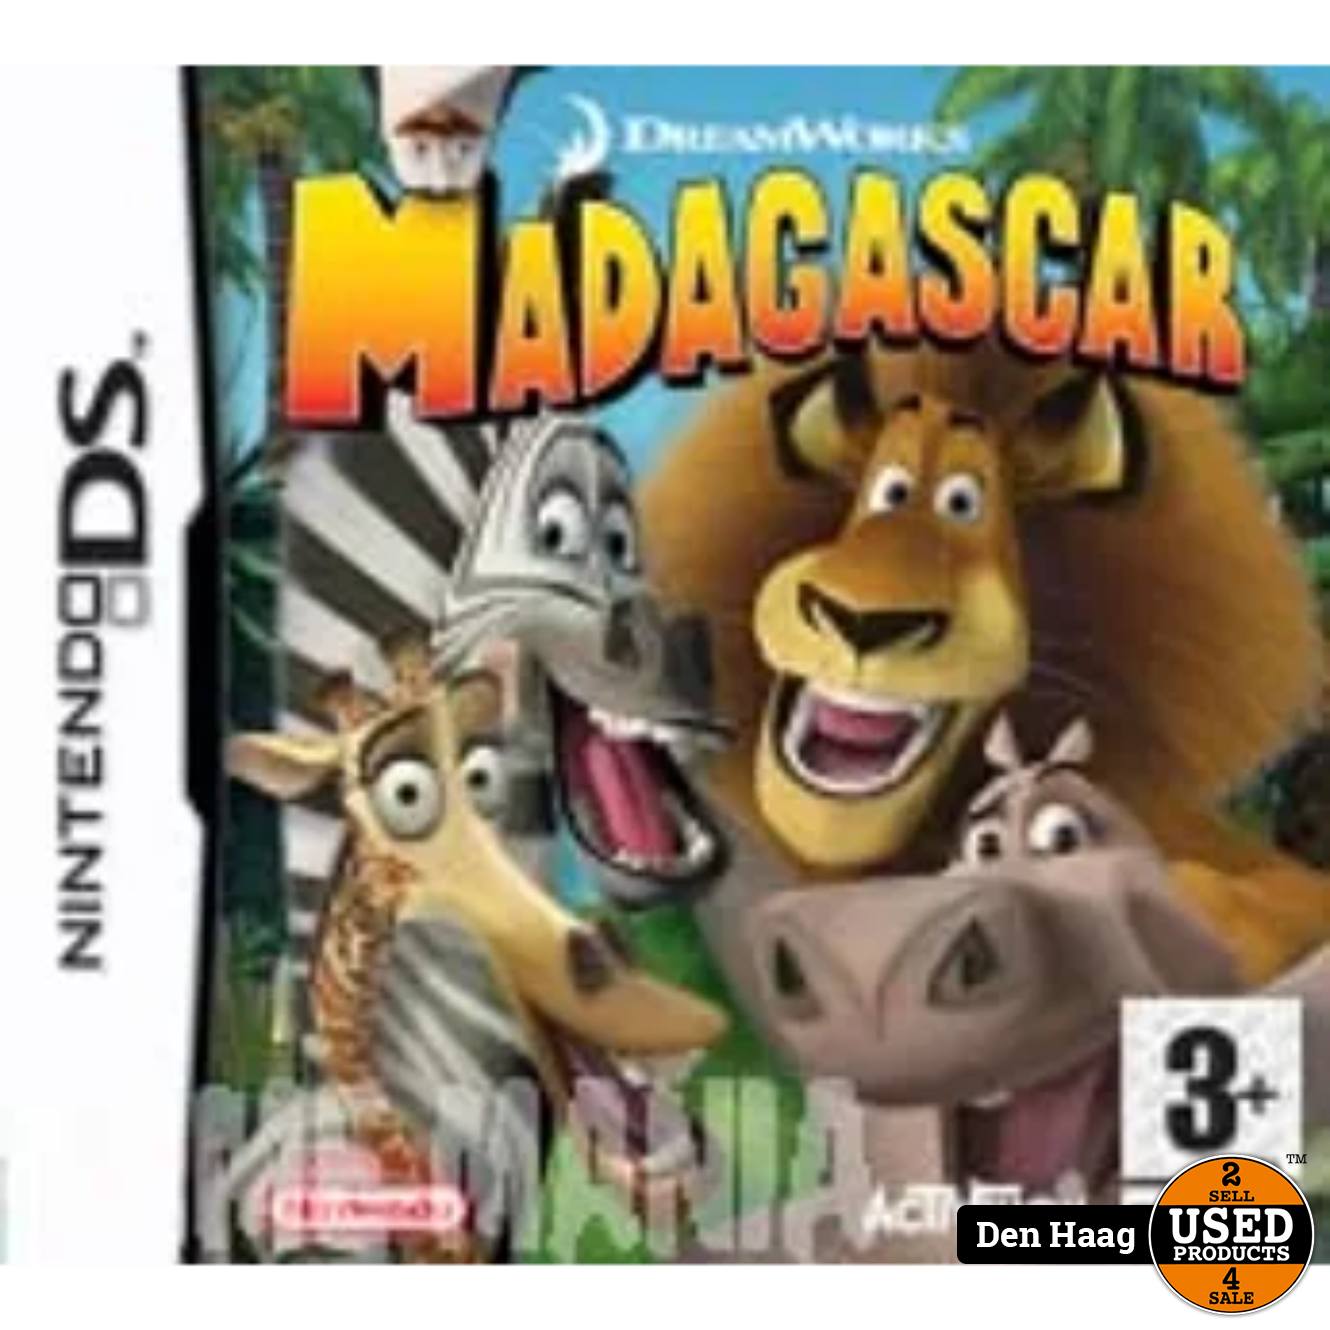 Jet Bestaan dwaas nintendo Nintendo DS | Madagascar - Used Products Den Haag